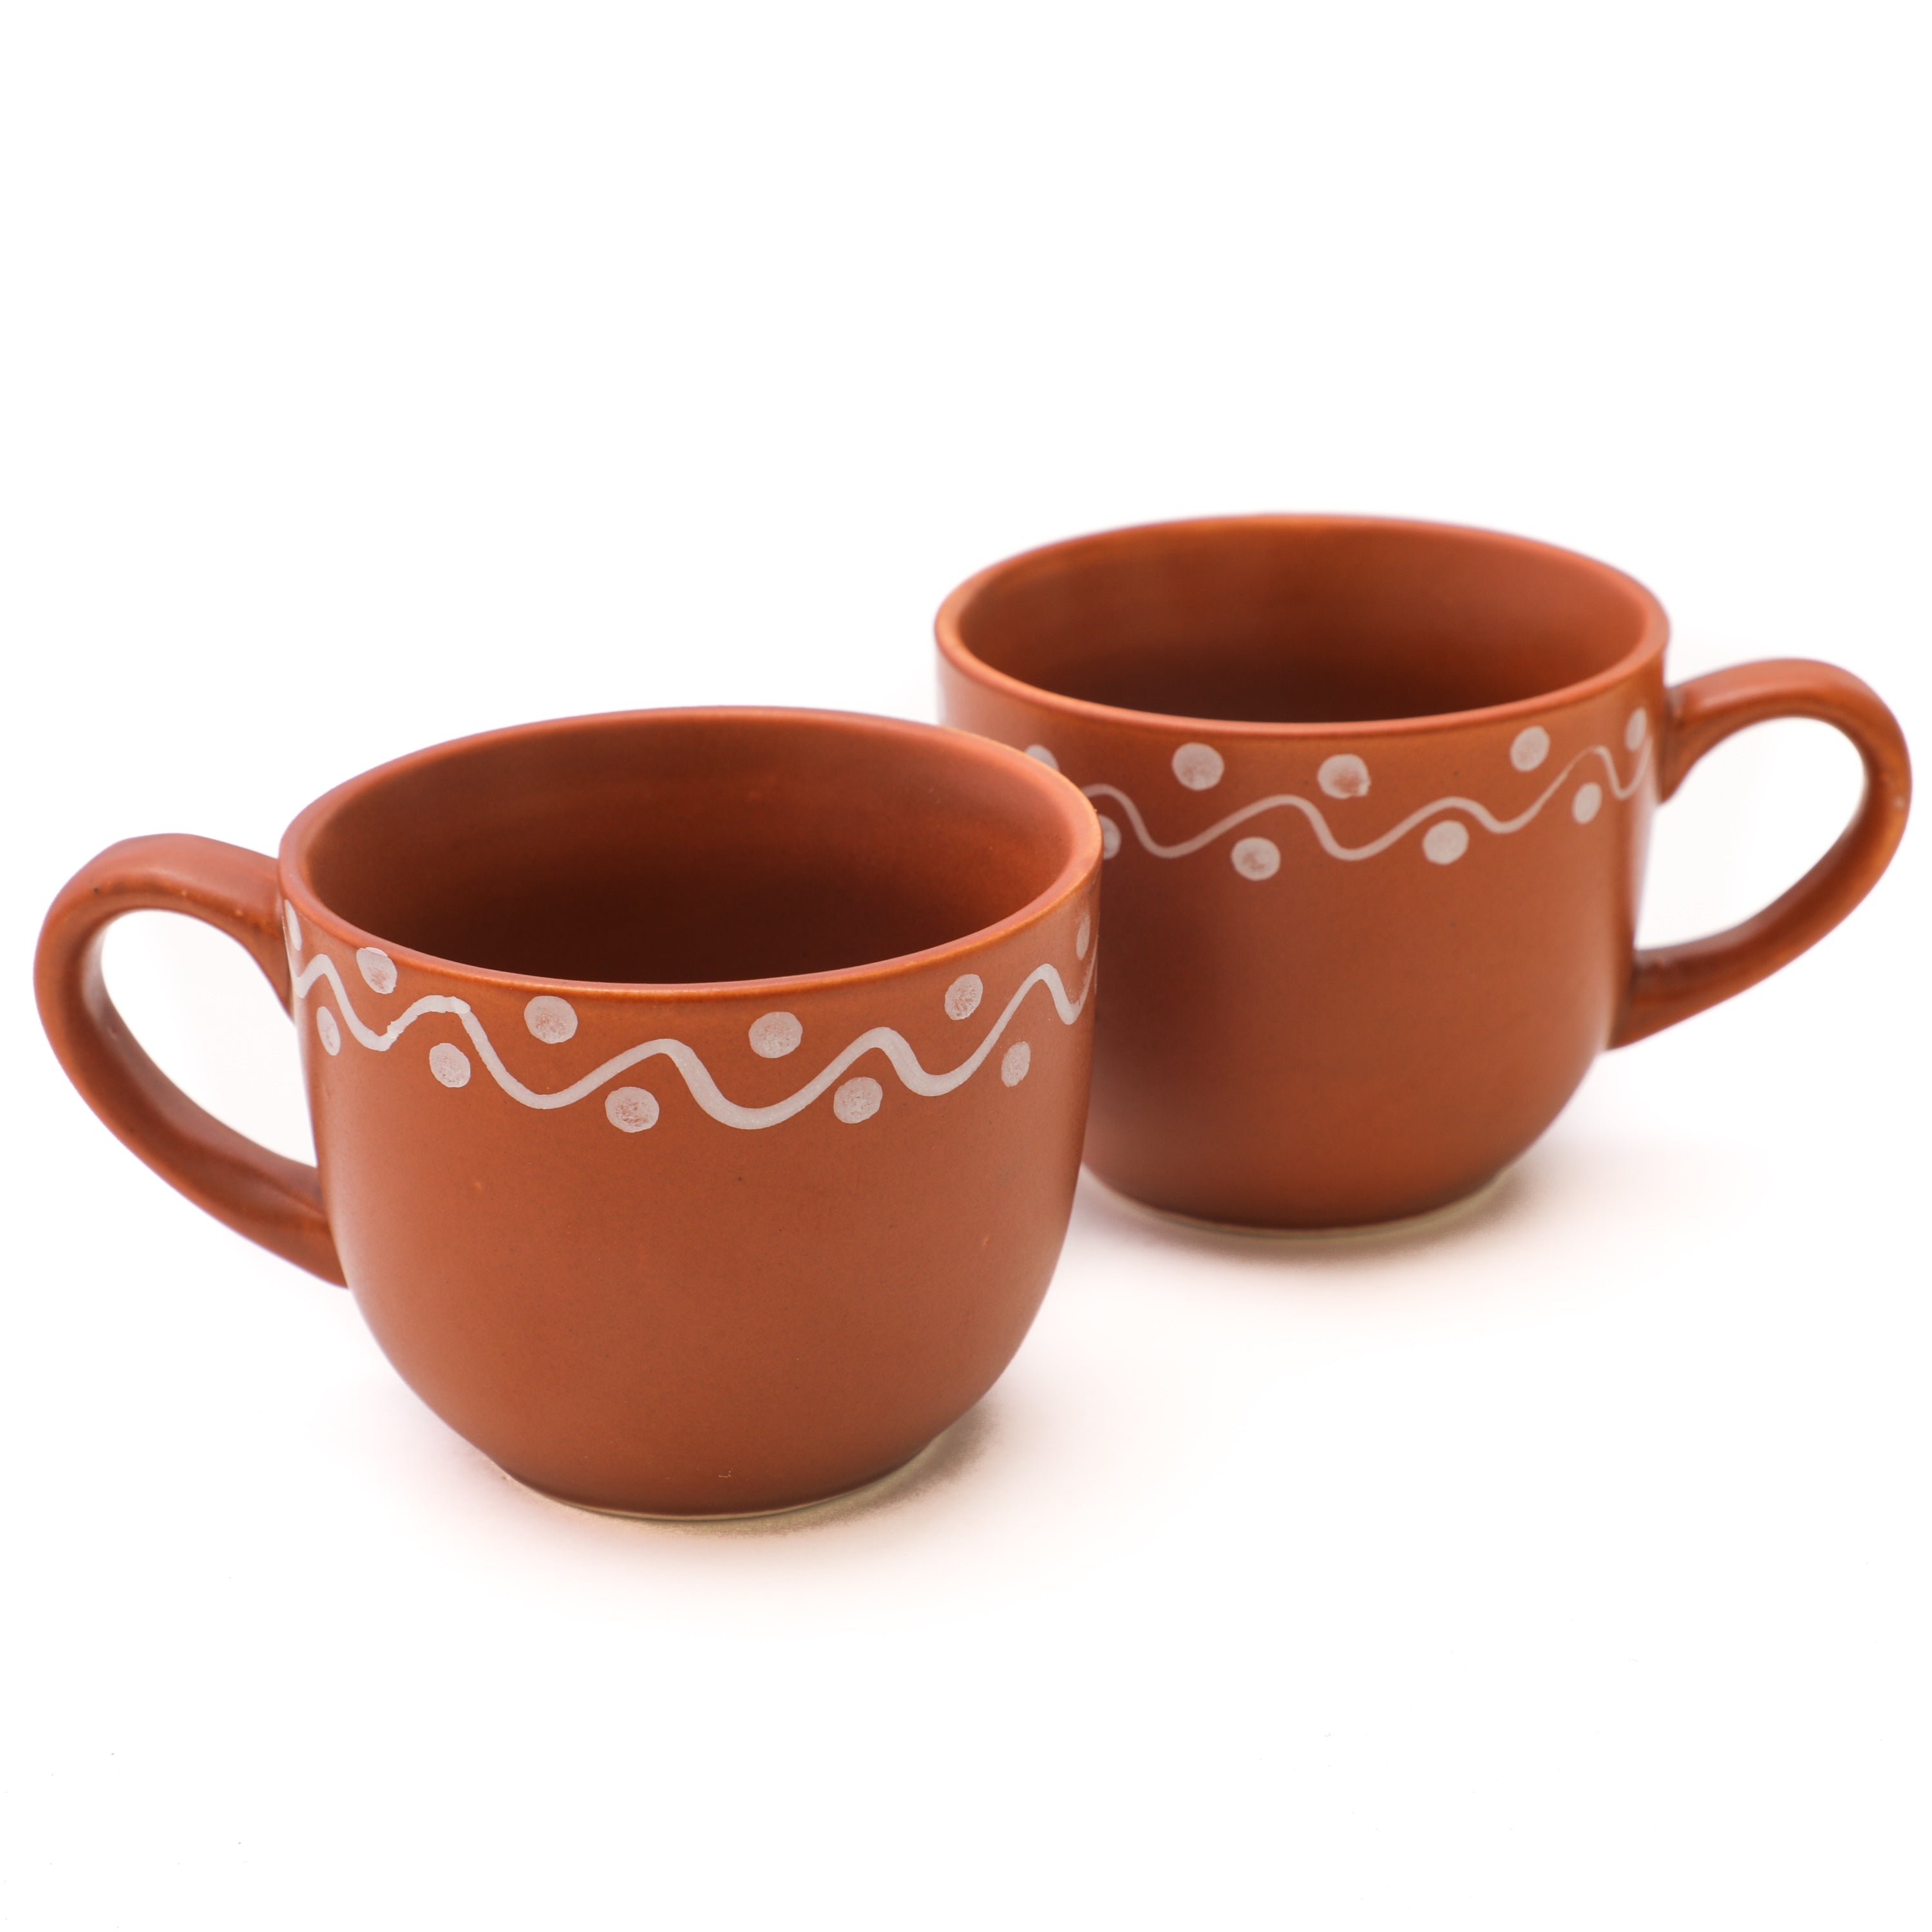 Muggu printed teacups for wedding and pooja return gifts